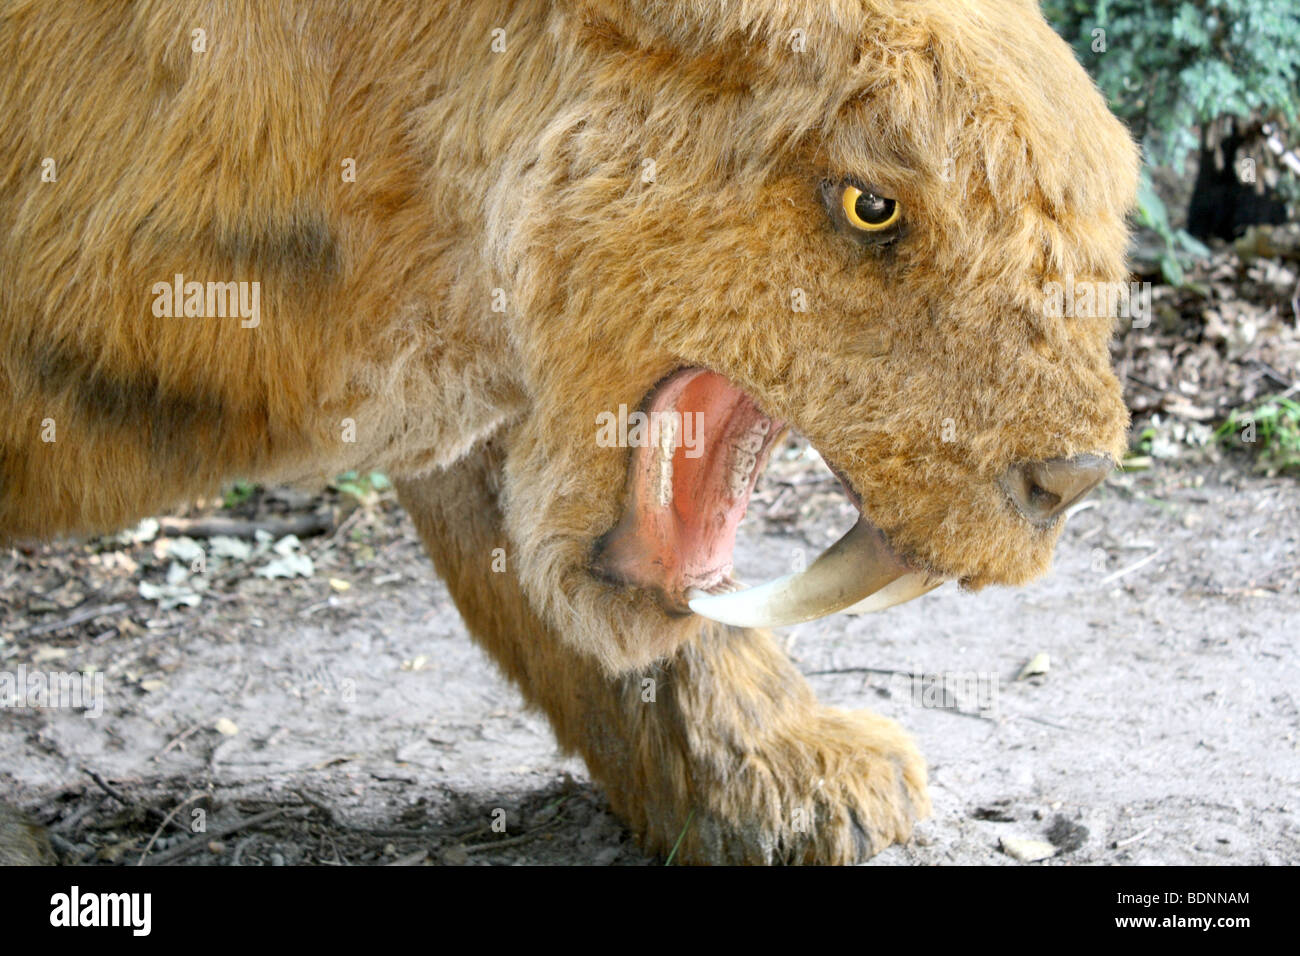 Saber-tigre dentata, parco preistorico, Nowiny Wielkie, Polonia, dimensione reale replica, 2009 Foto Stock